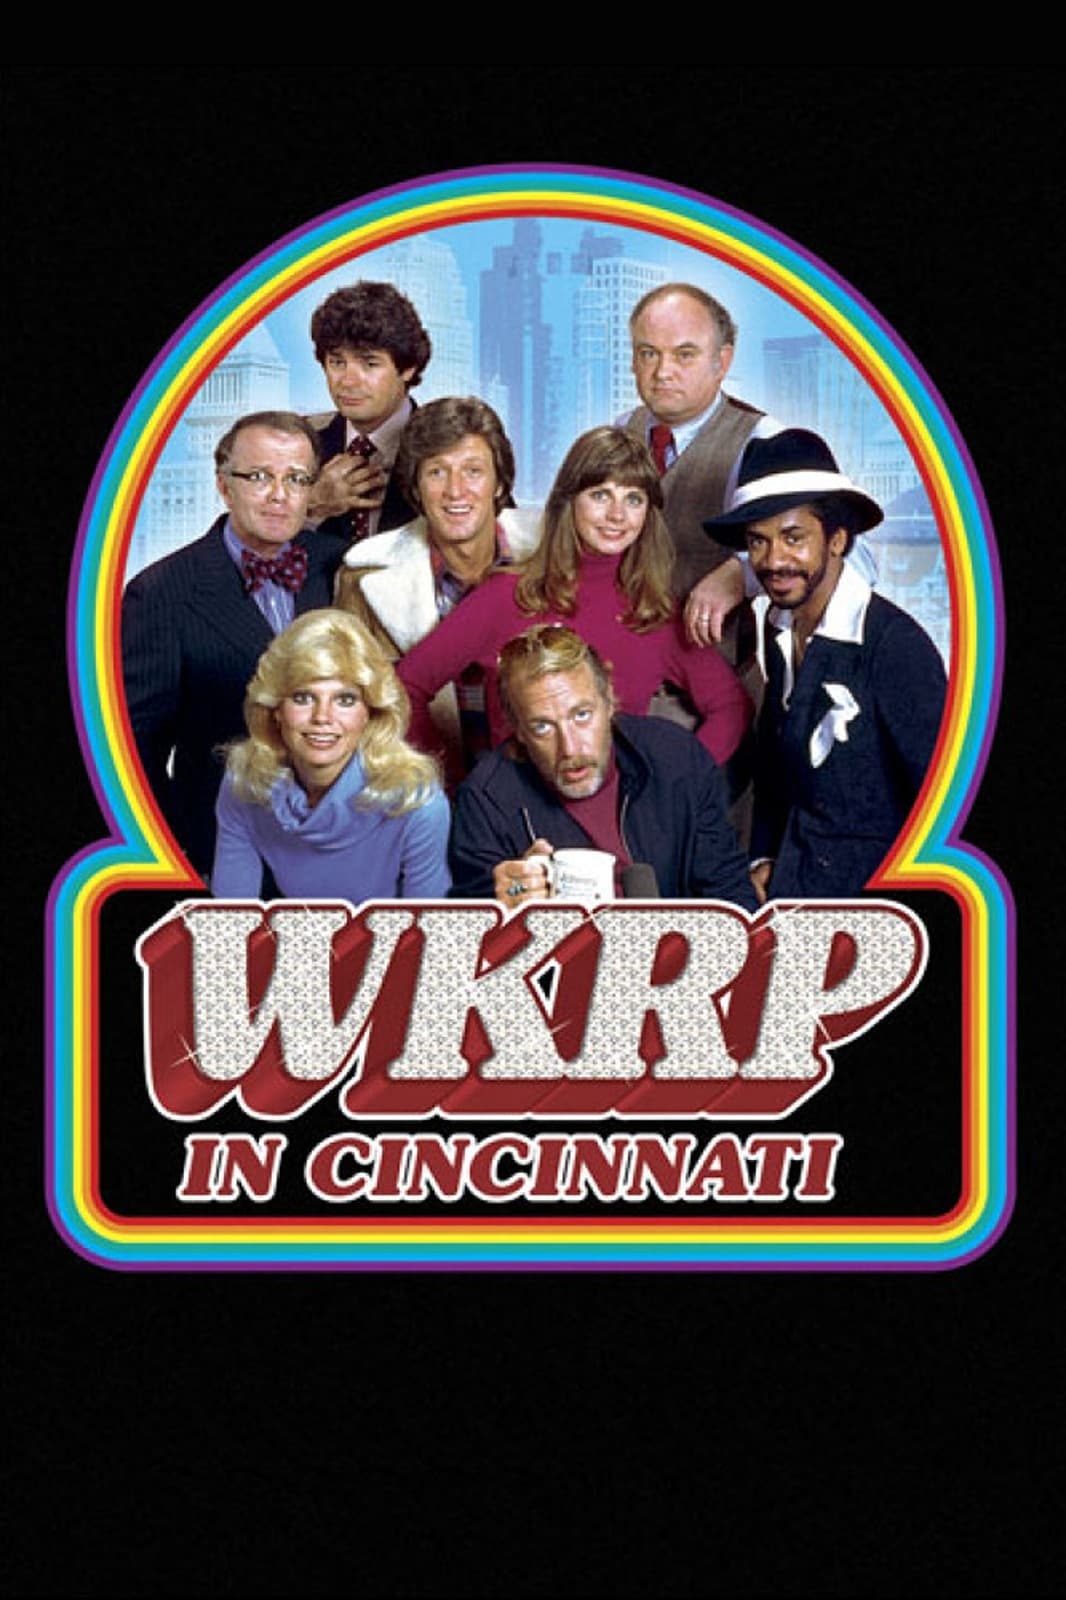 WKRP in Cincinnati (1978)